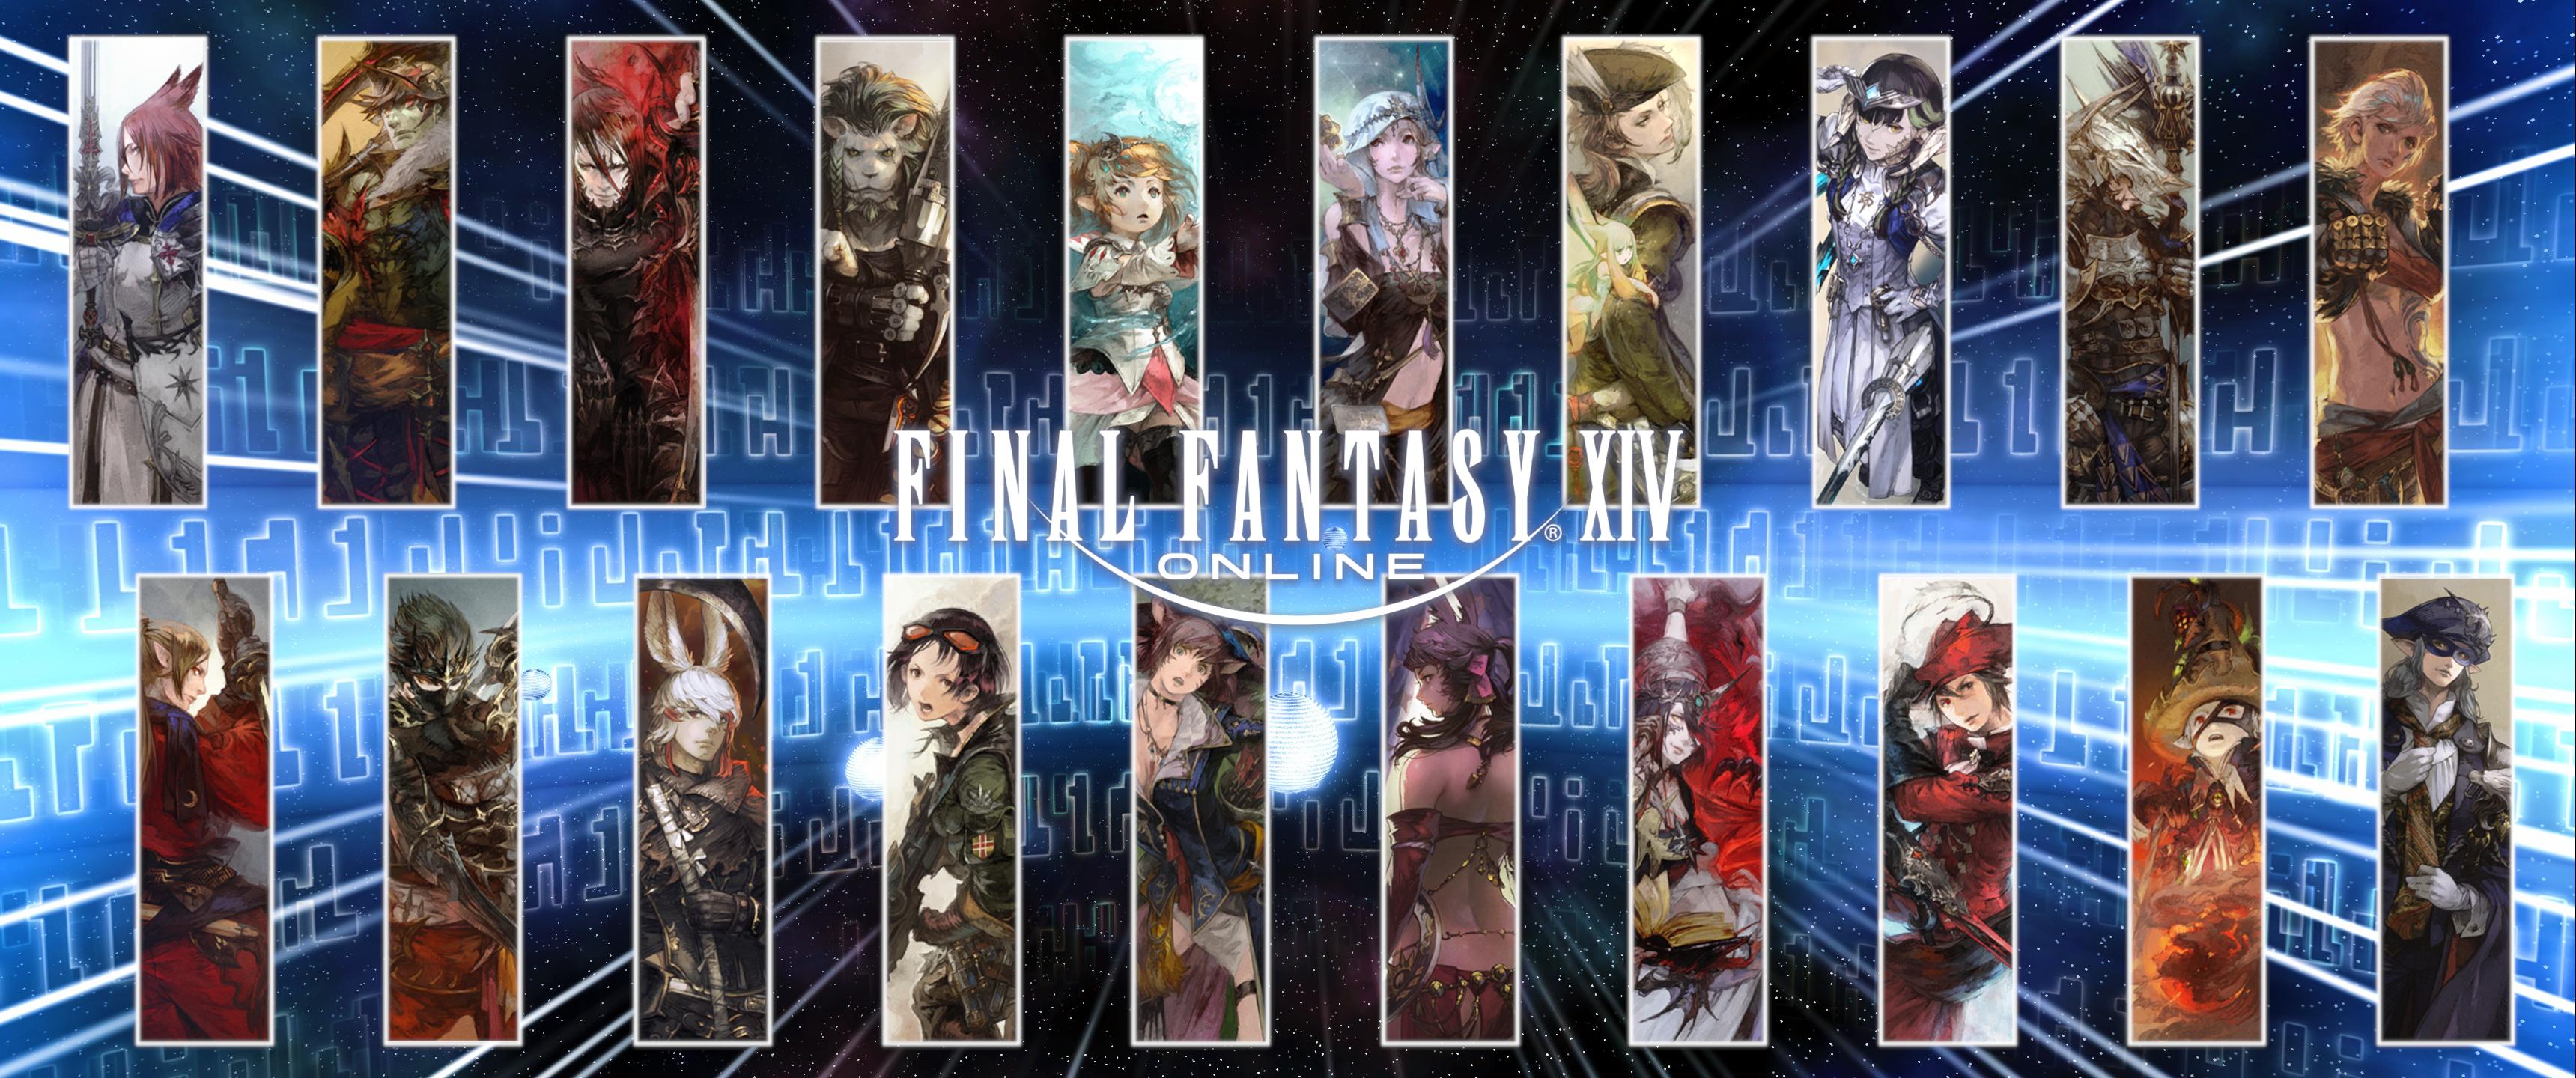 Final Fantasy XIV Endwalker Wallpapers  Top 25 Best Final Fantasy XIV  Endwalker Backgrounds Download